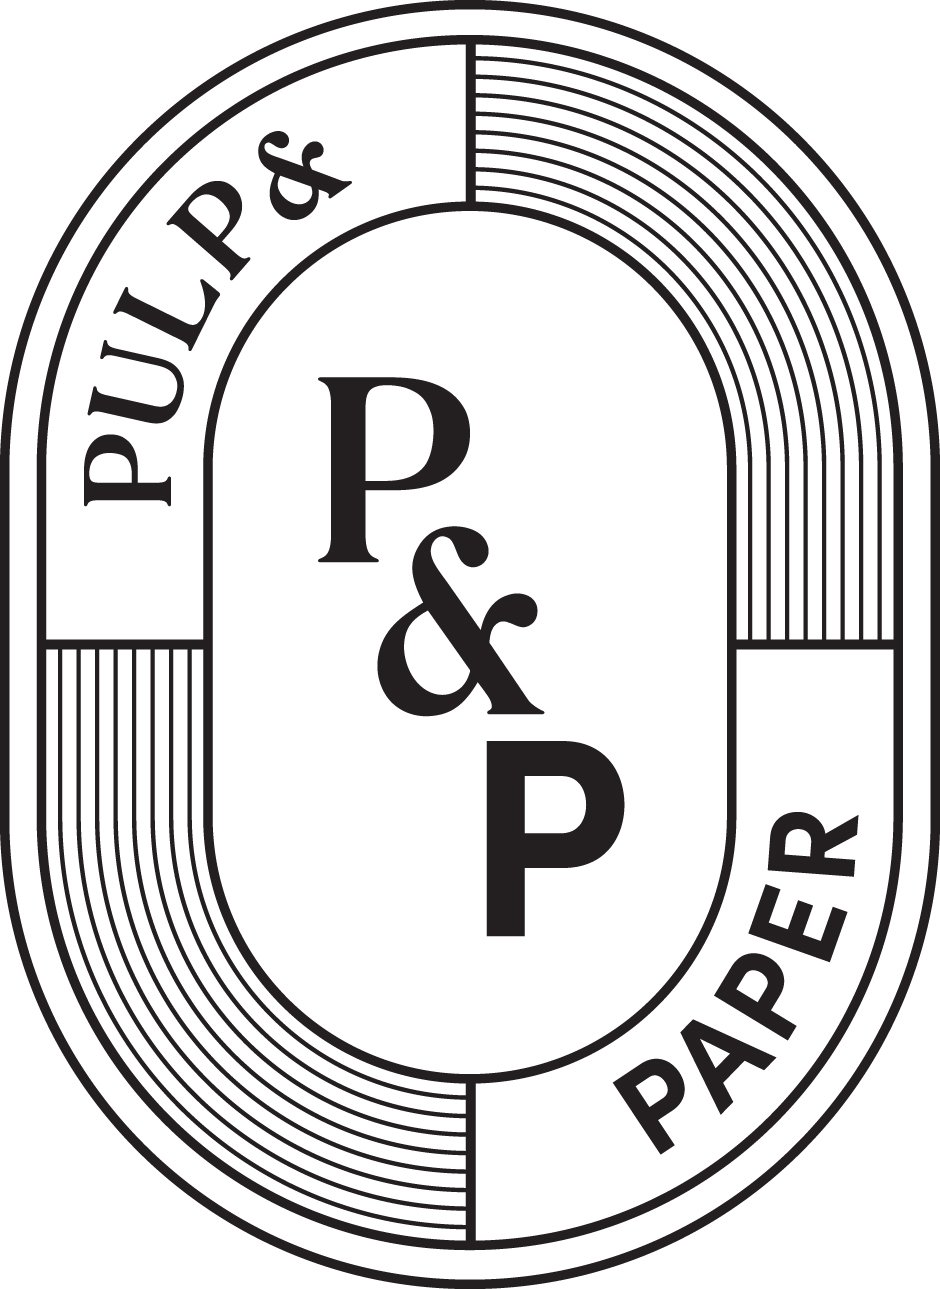 Pulp &amp; Paper Books (Copy)